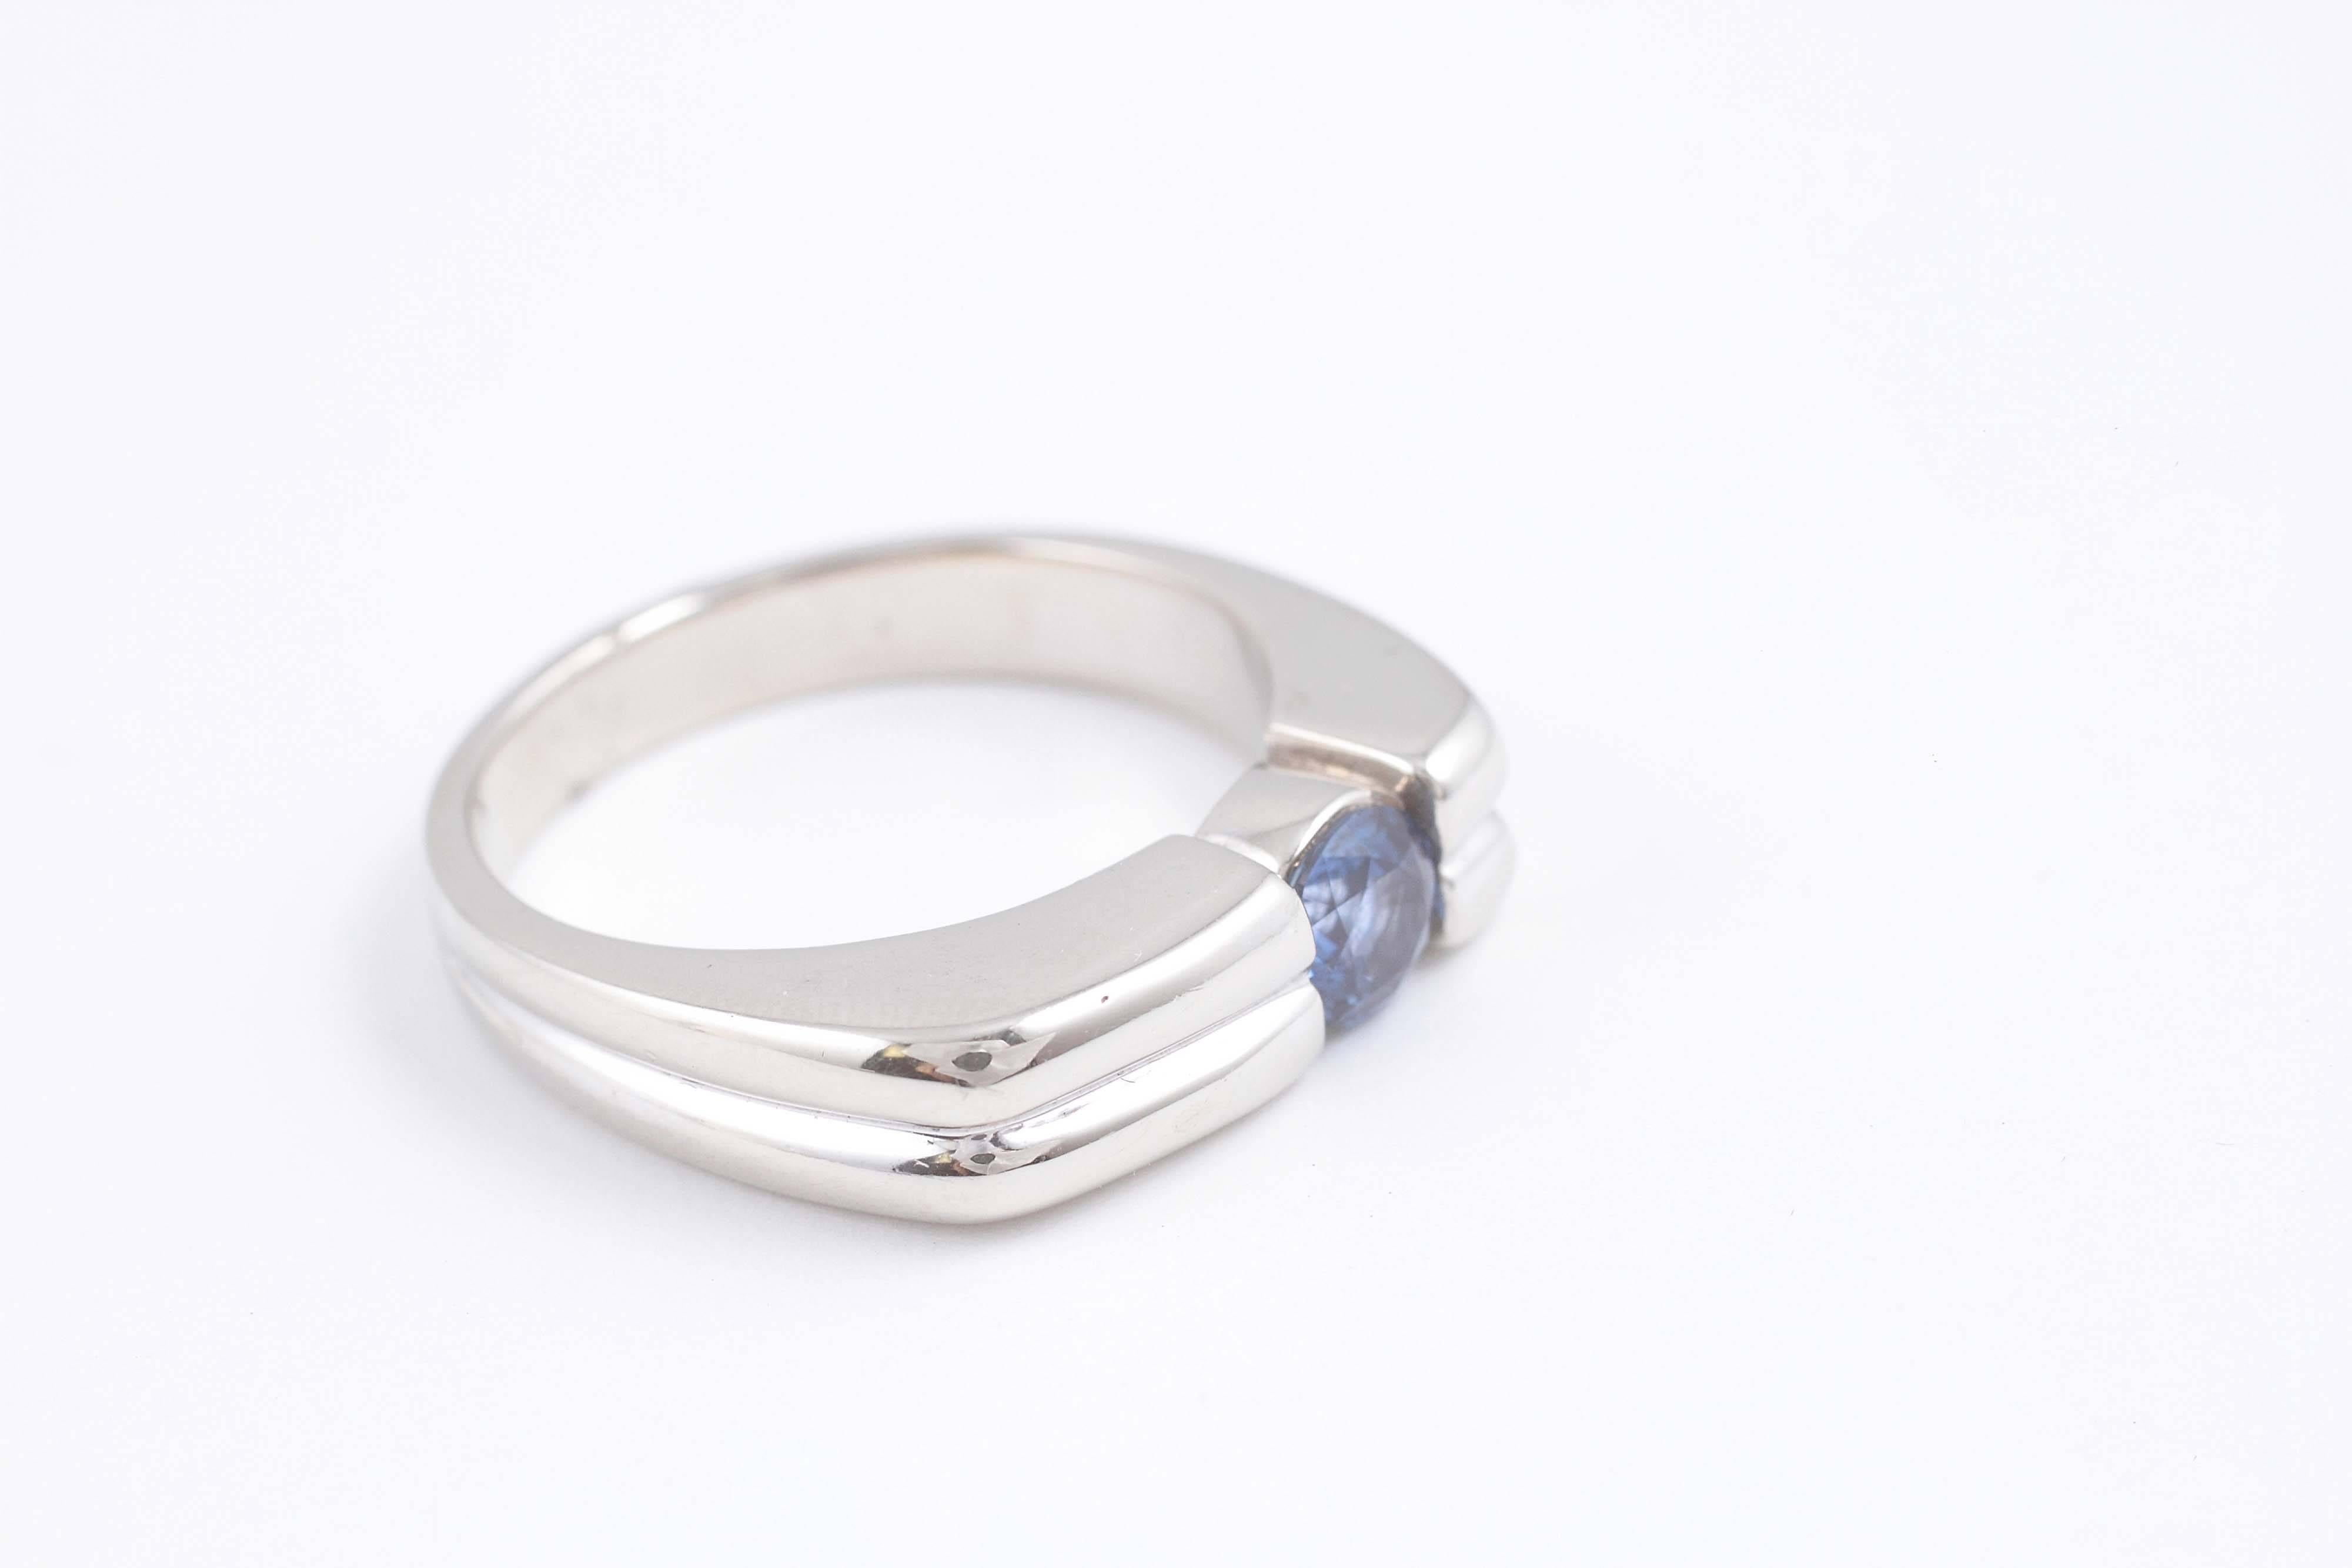 Lovely shade of blue!  14 karat white gold ring, size 10 1/2.